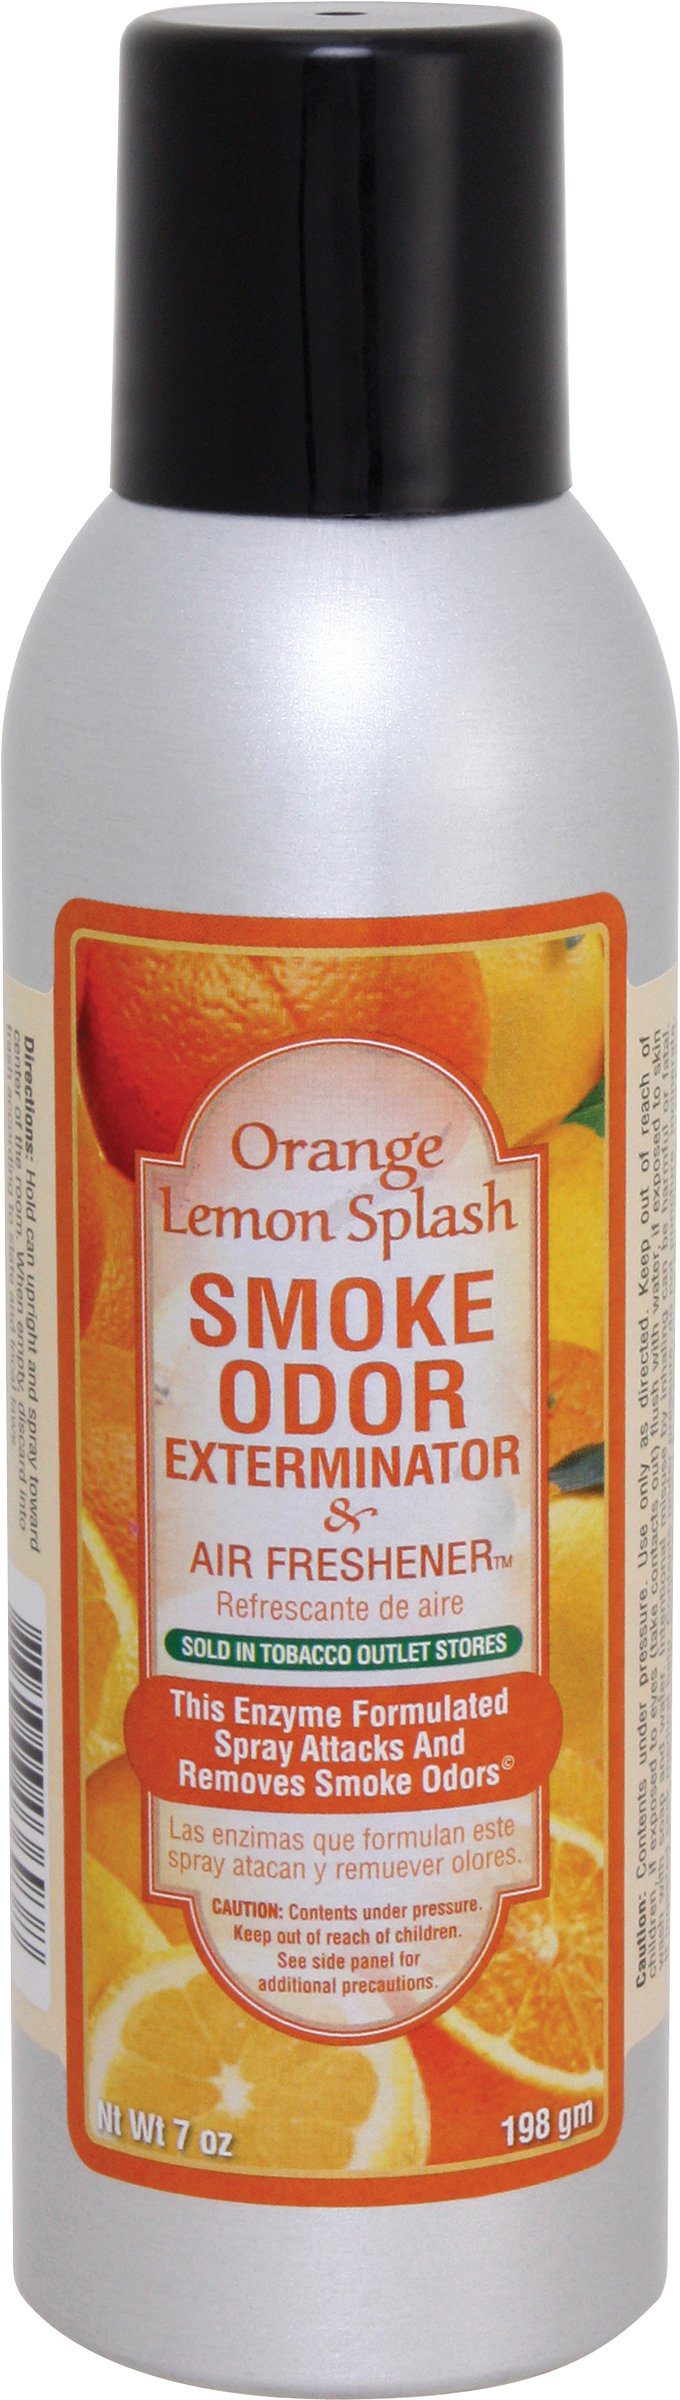 smoke odor exterminator spray bottle orange lemon splash